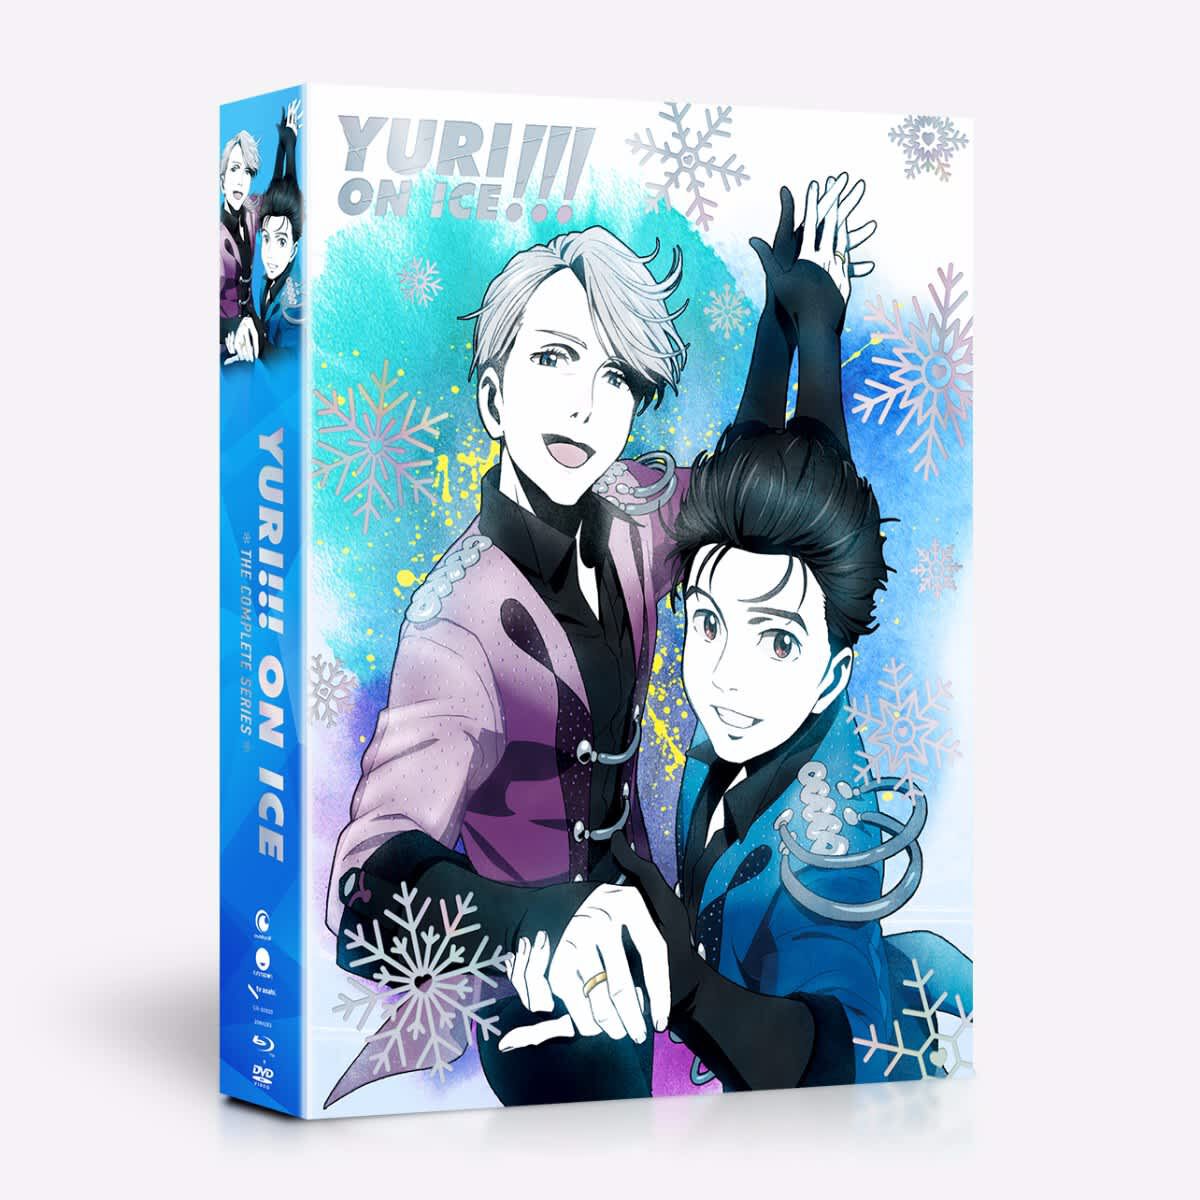 YURI!!! on ICE Blu-rayエンタメ/ホビー - アニメ